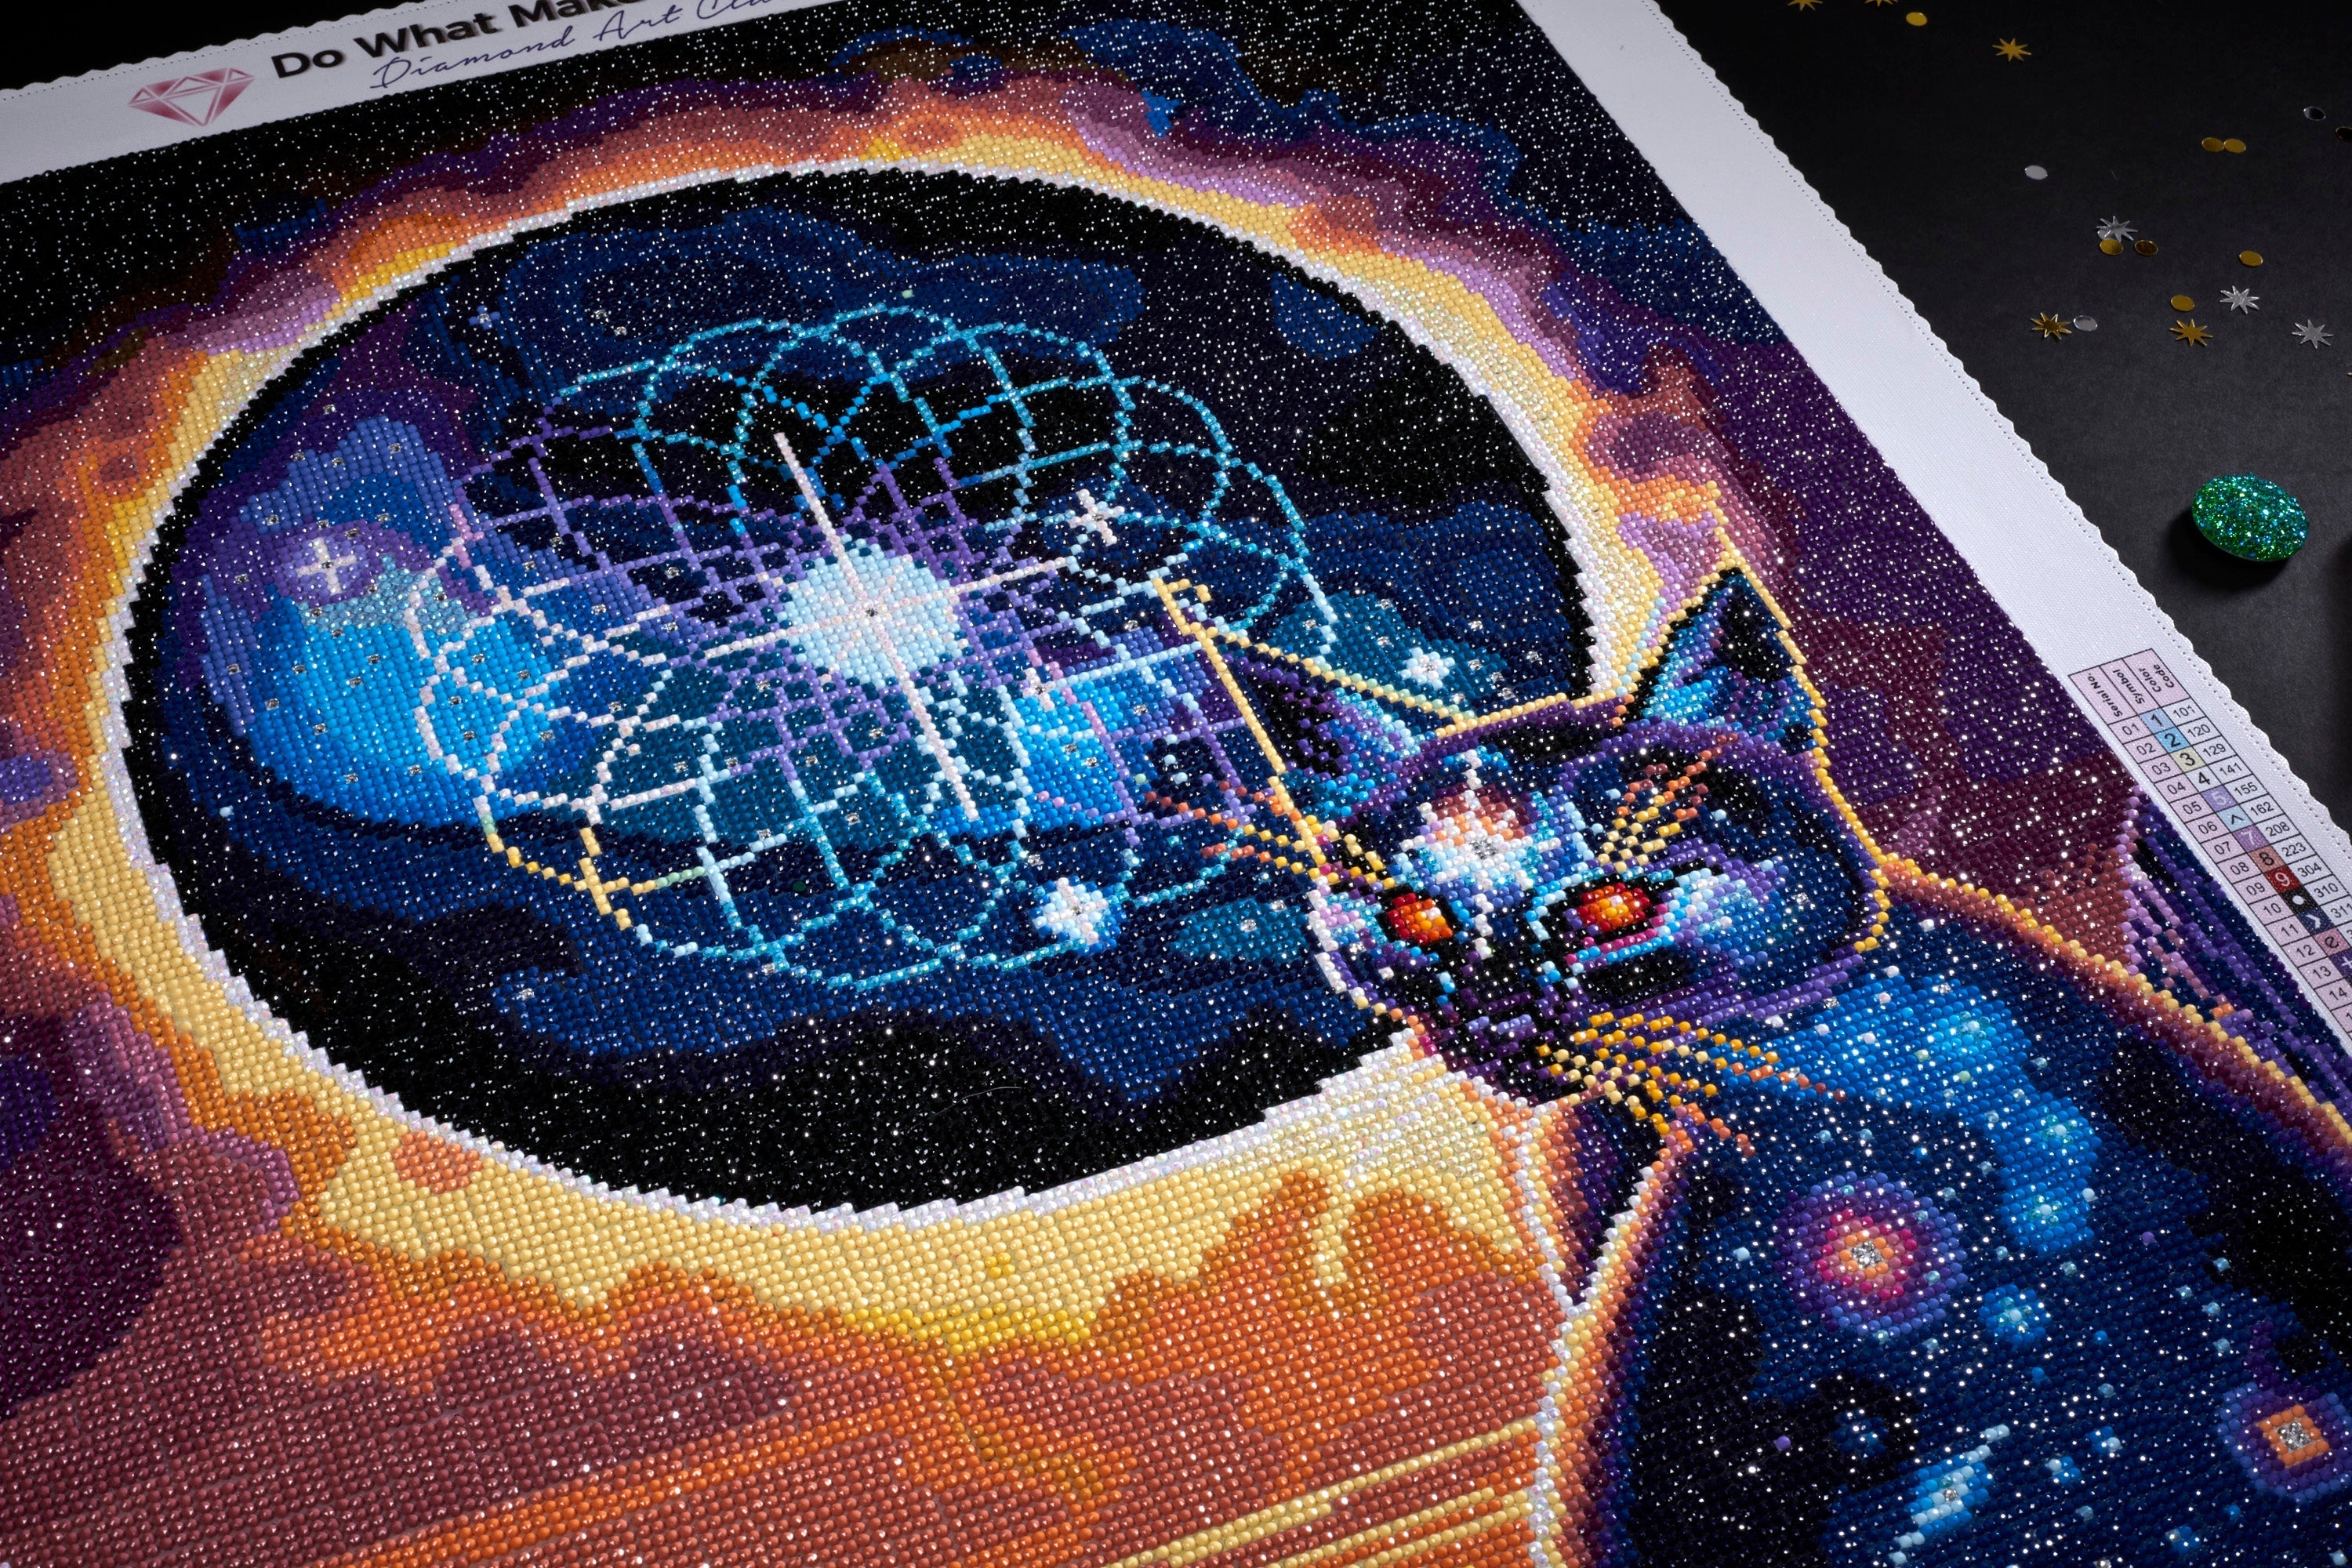 Galaxy Cat – Diamond Painting